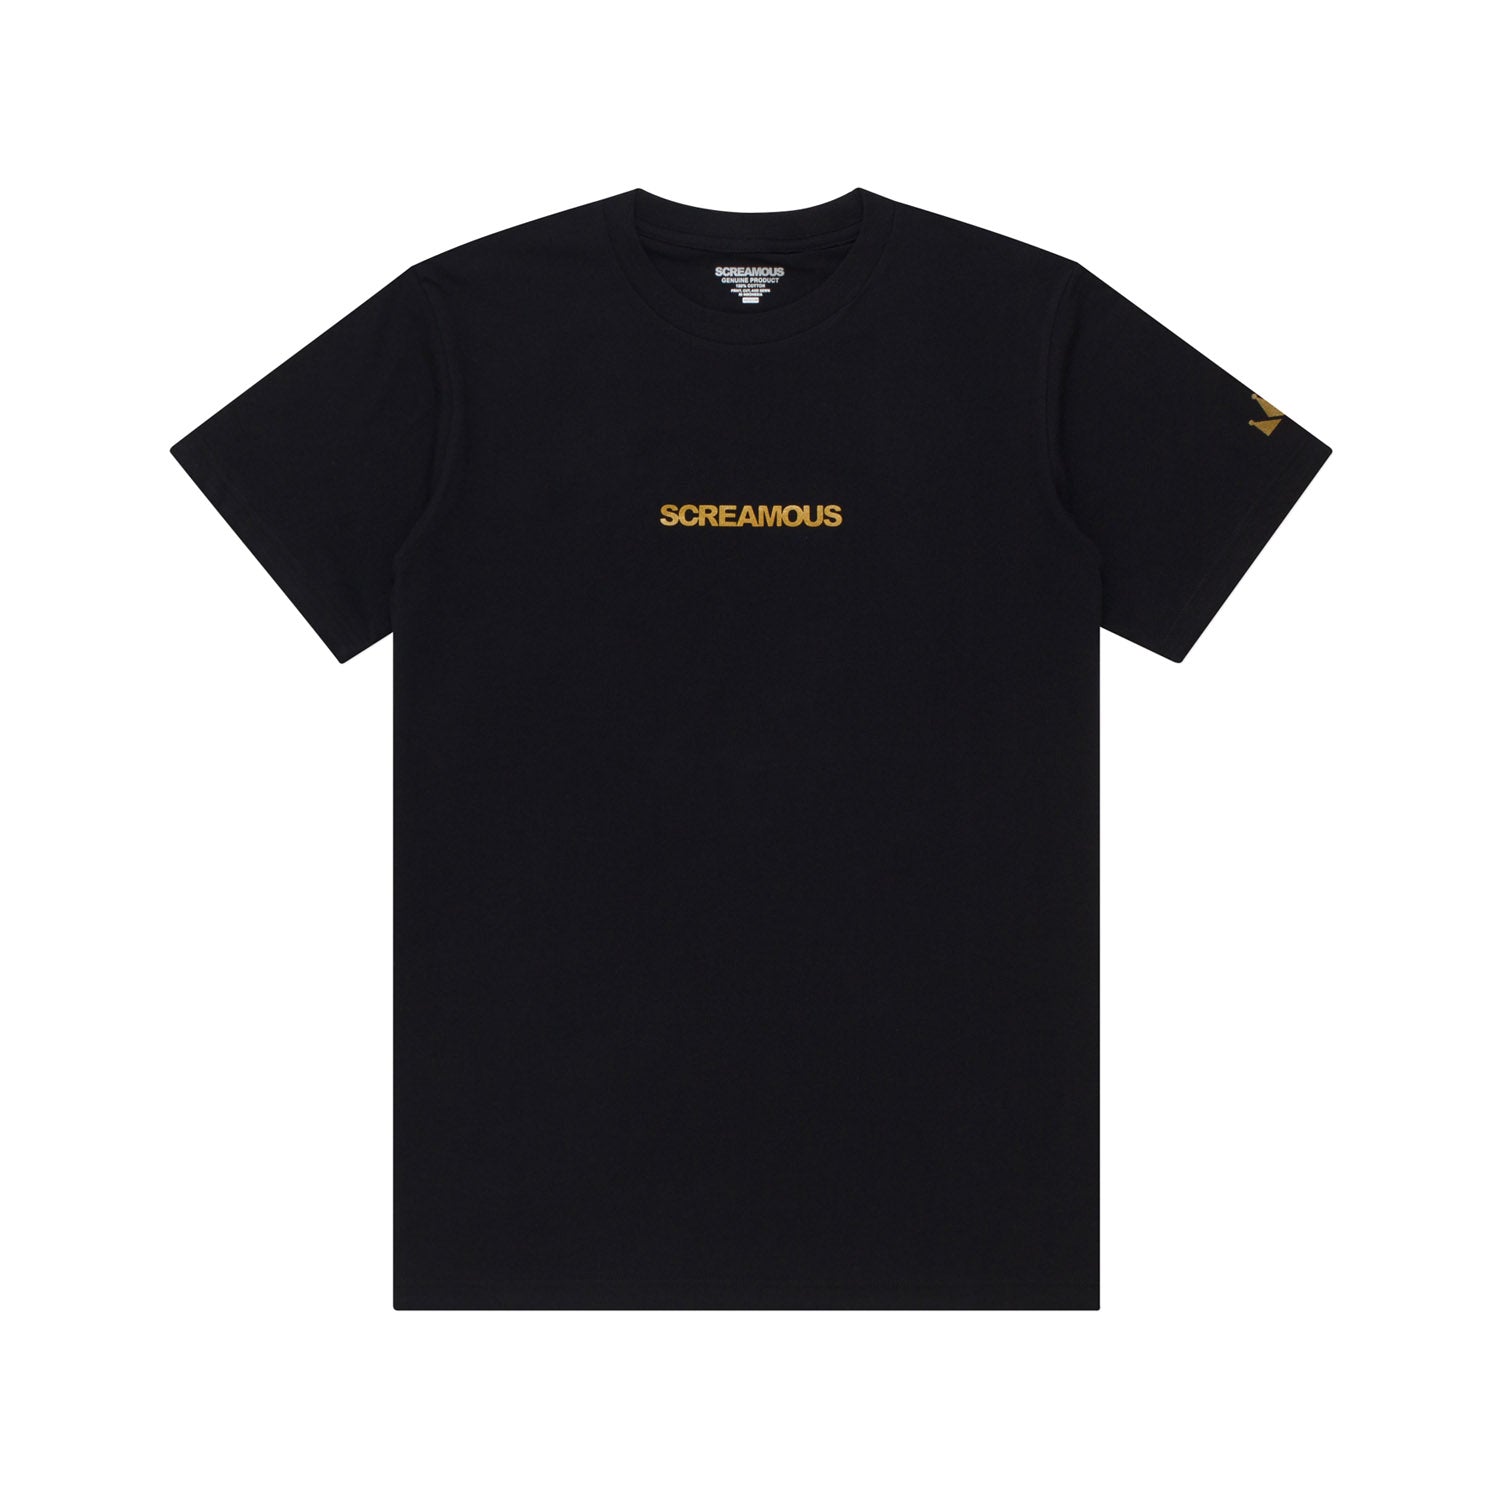 T-Shirt LEGEND TINY ON GOLD BLACK